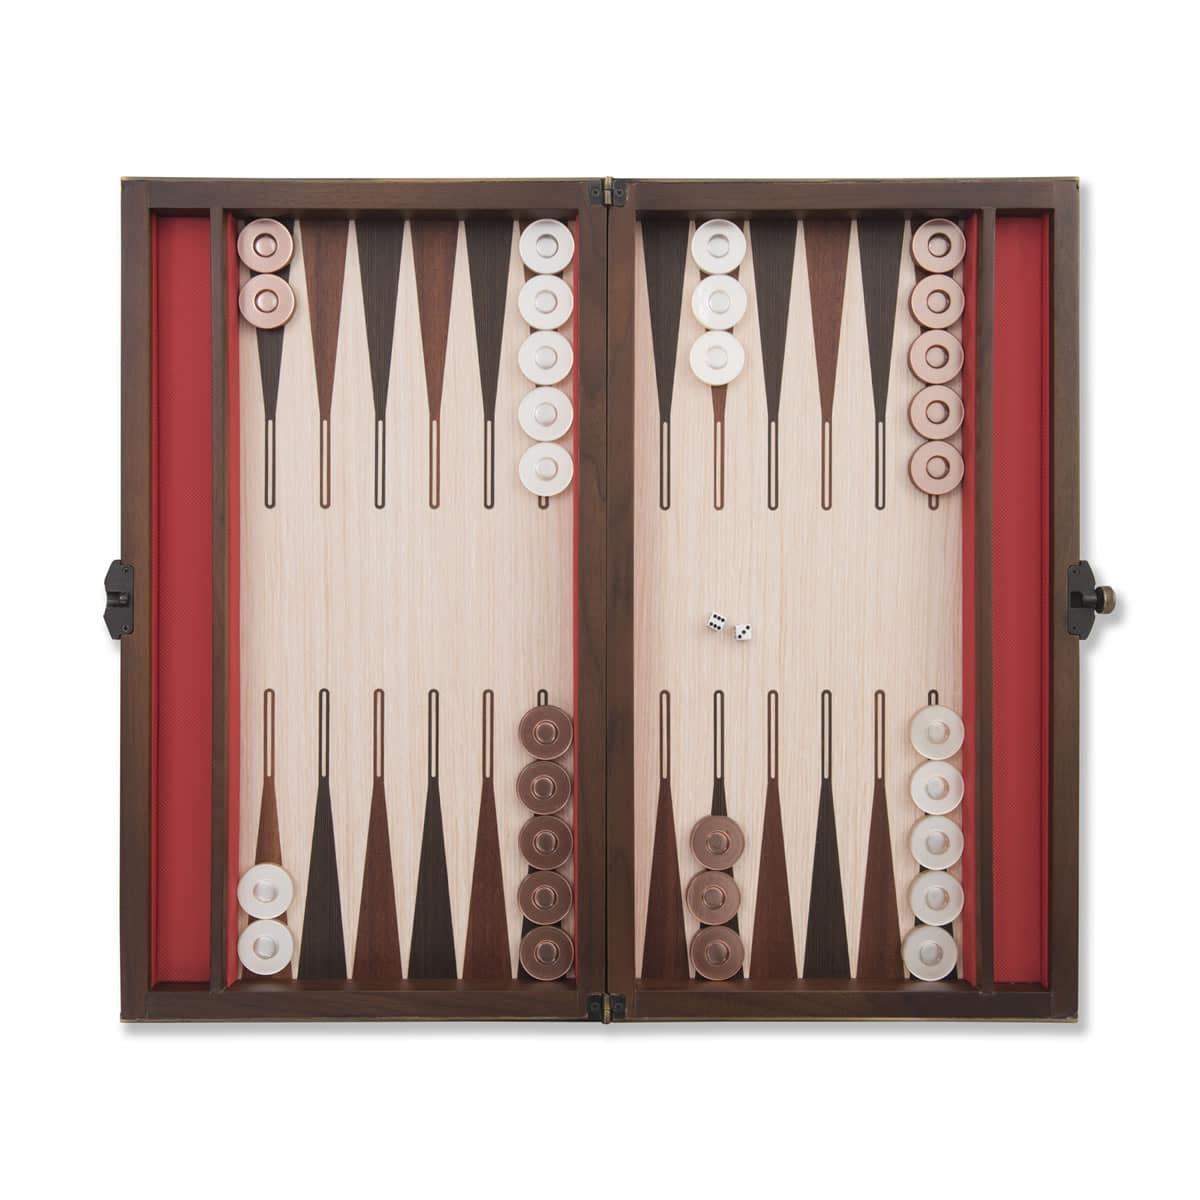 Turkish wooden backgammon set turga series by Sy backgammon